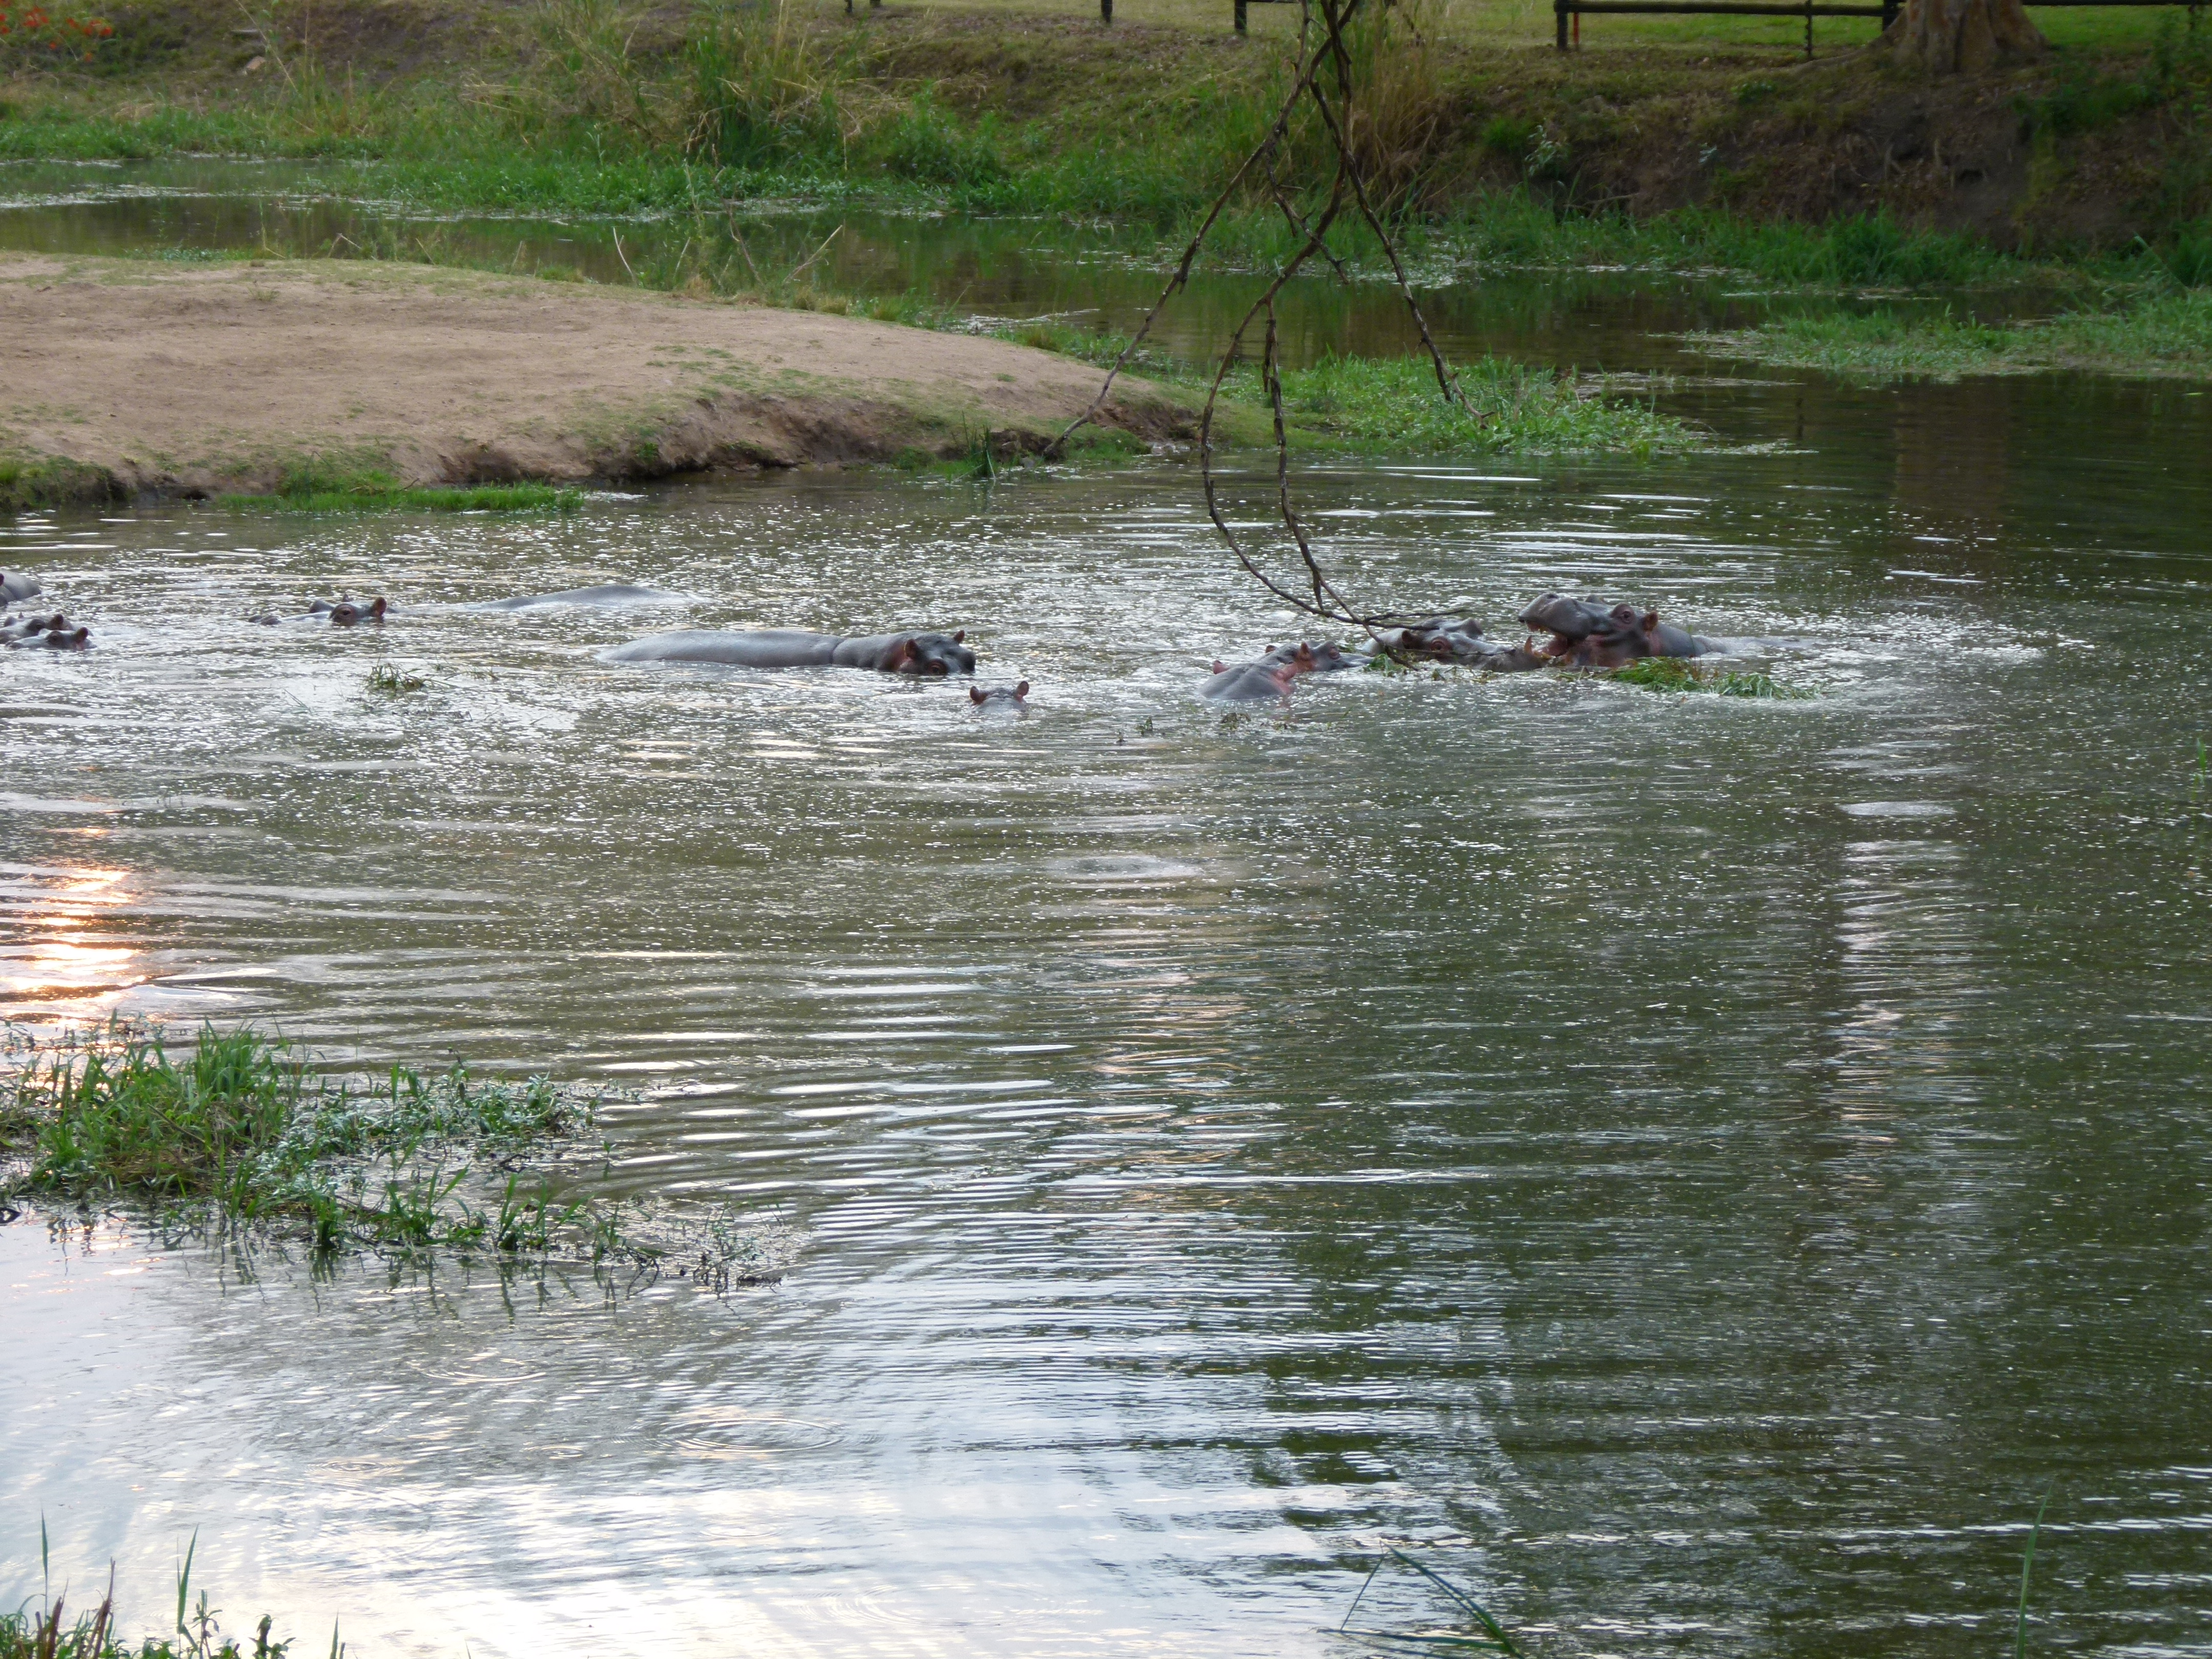 Plenty of hippo activity